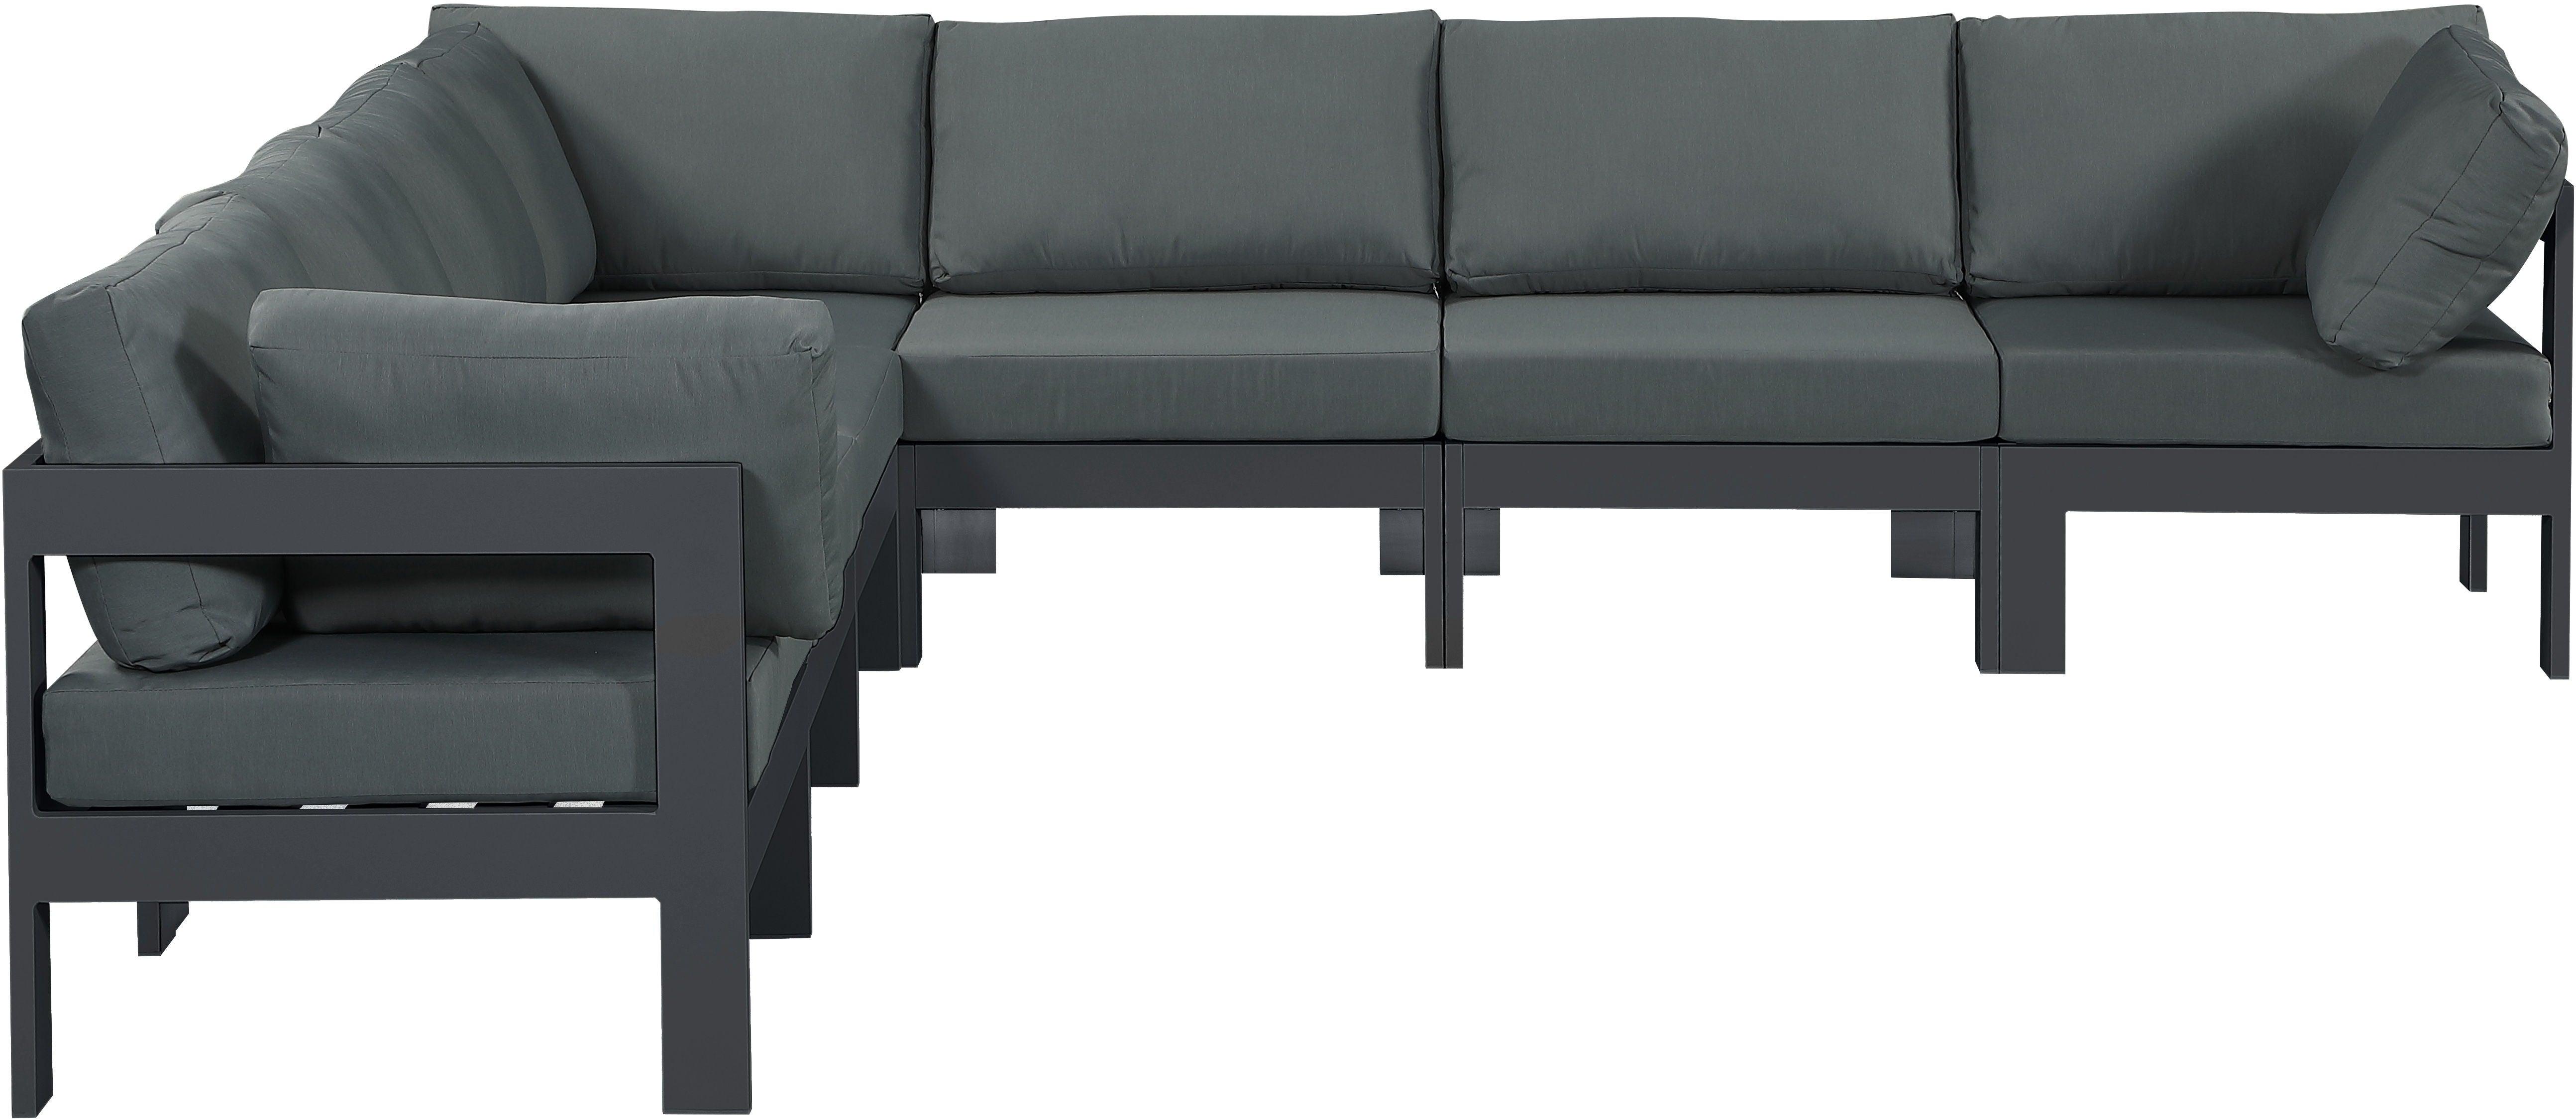 Meridian Furniture - Nizuc - Outdoor Patio Modular Sectional 7 Piece - Gray Dark - Fabric - 5th Avenue Furniture